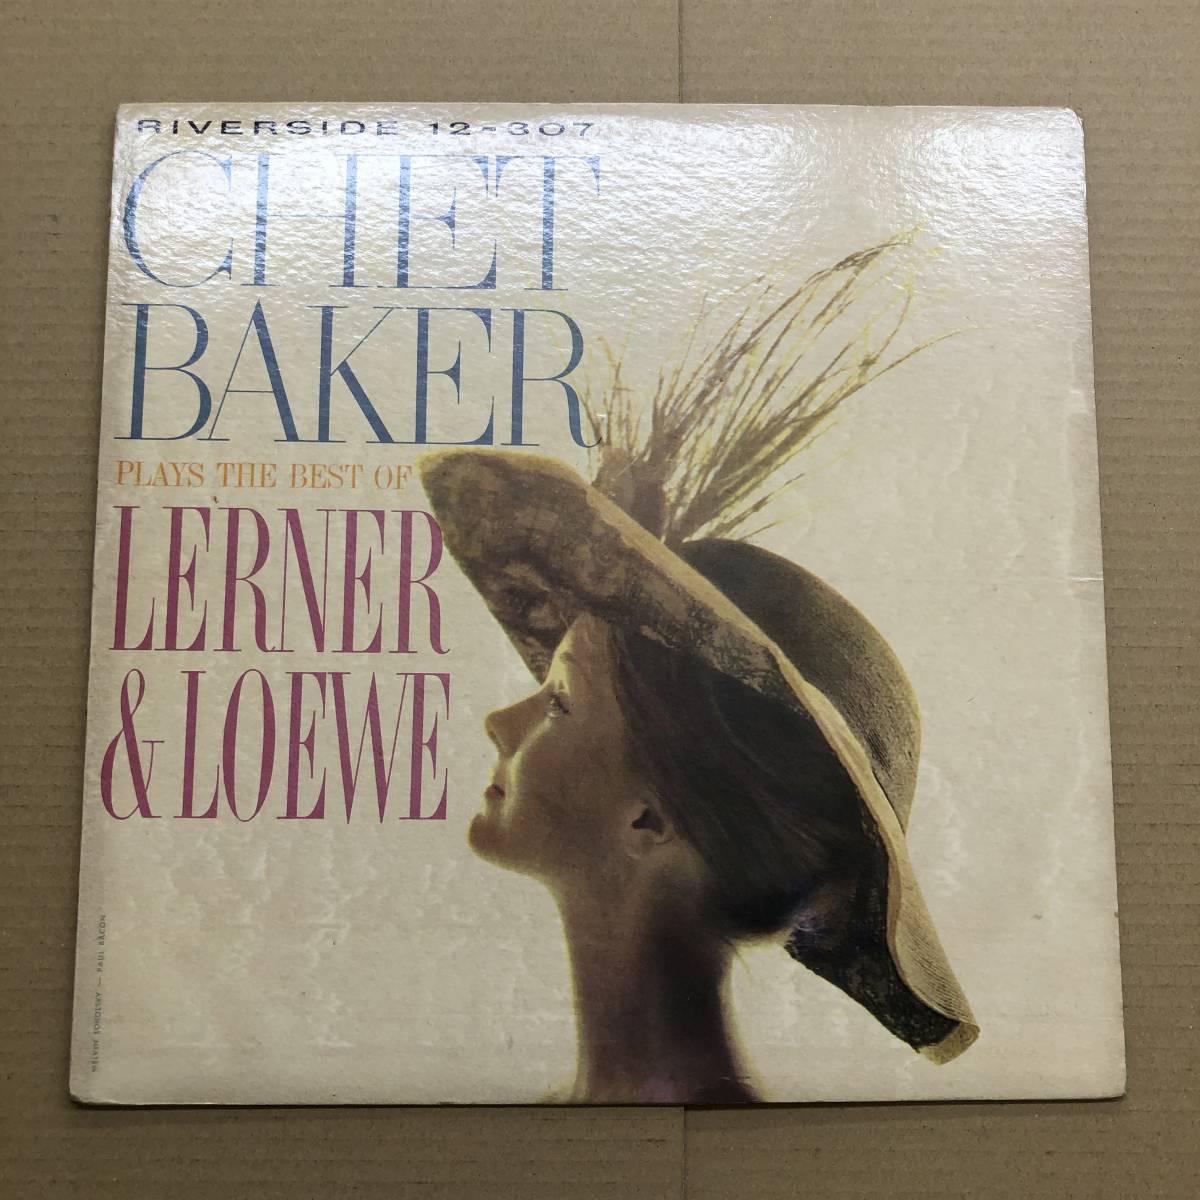 (LP) Chet Baker - Plays The Best Of Lerner & Loewe［RLP12-307］アメリカ盤 Riverside BGP DG 553W MONO チェット・ベイカー